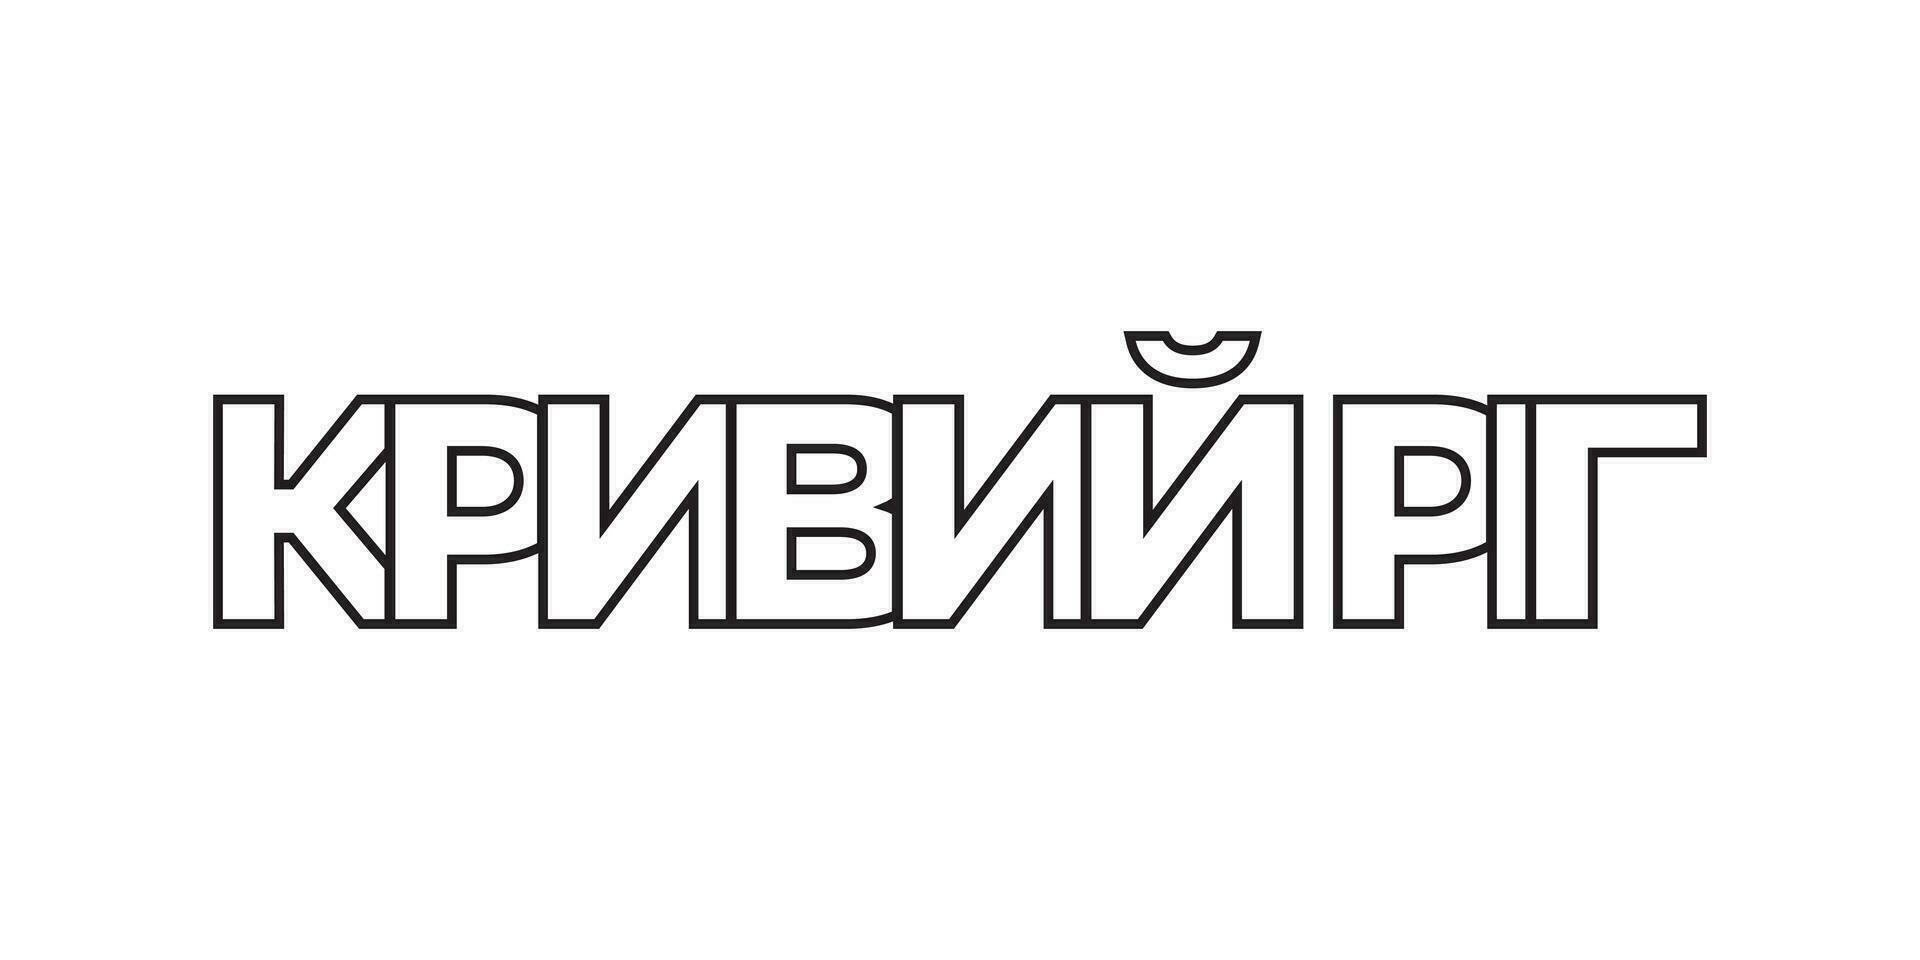 kryvyi rih i de ukraina emblem. de design funktioner en geometrisk stil, vektor illustration med djärv typografi i en modern font. de grafisk slogan text.